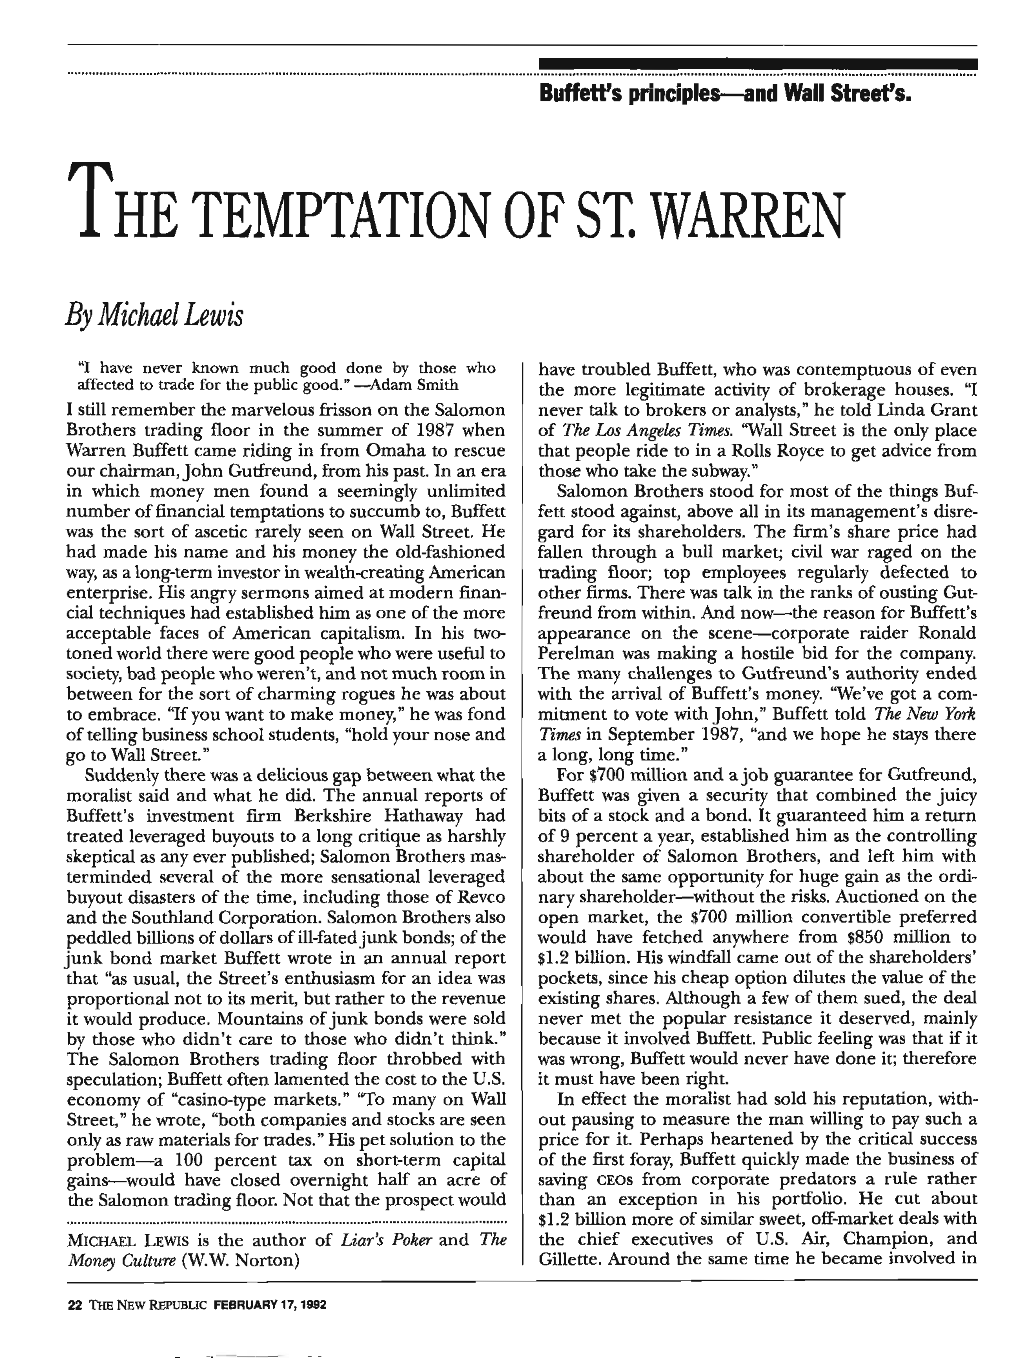 The Temptation of St Warren